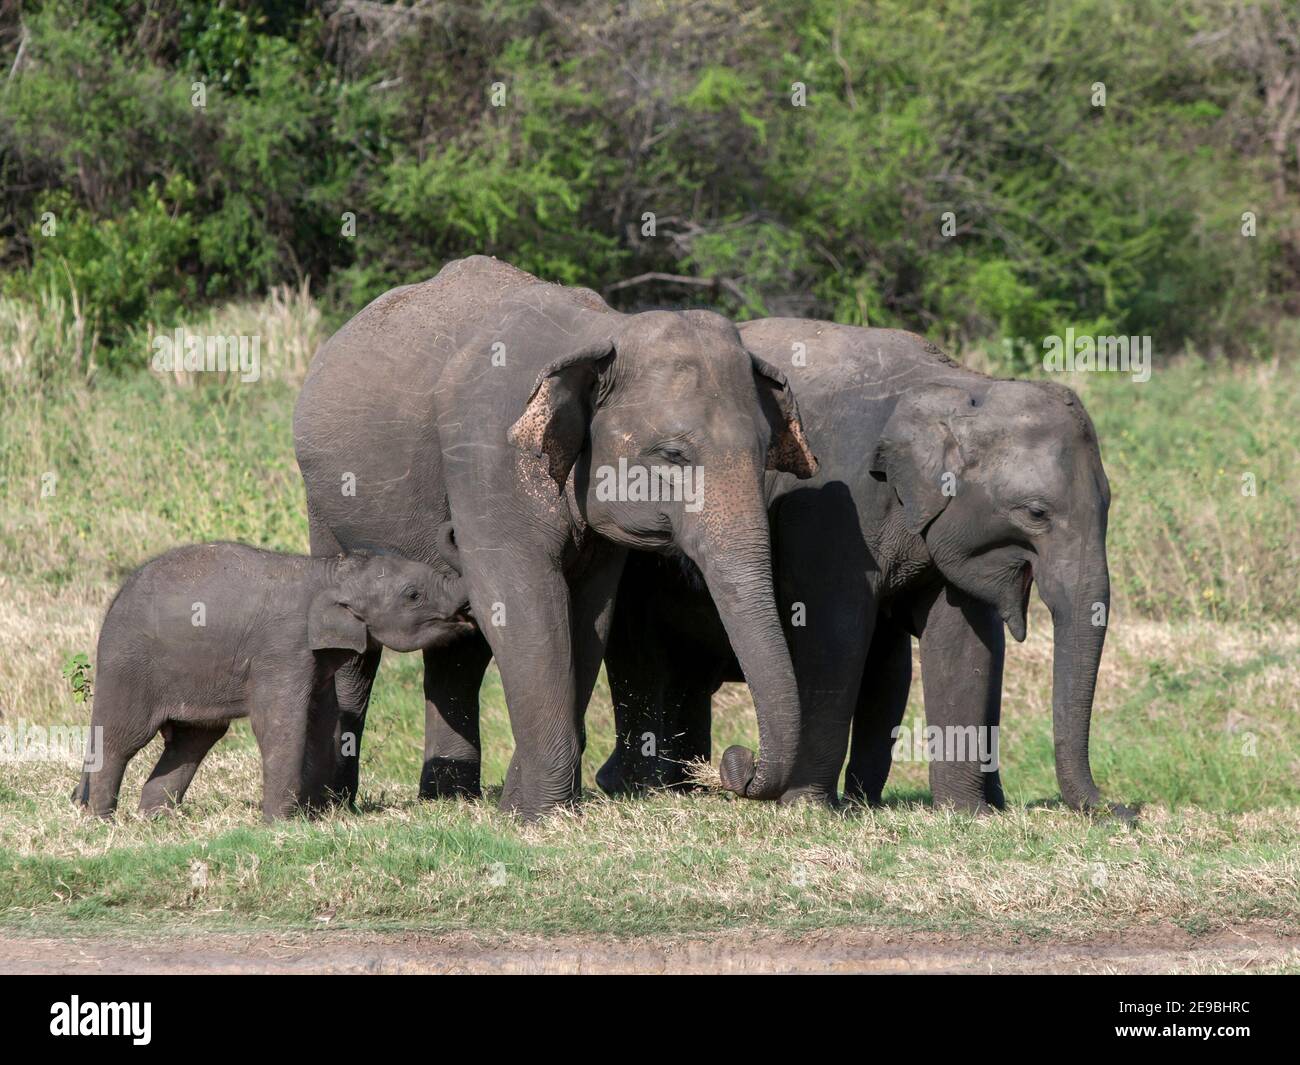 Wild elephants graze on grassland adjacent to the tank (man made reservoir) at Minneriya National Park near Habarana in central Sri Lanka. Stock Photo